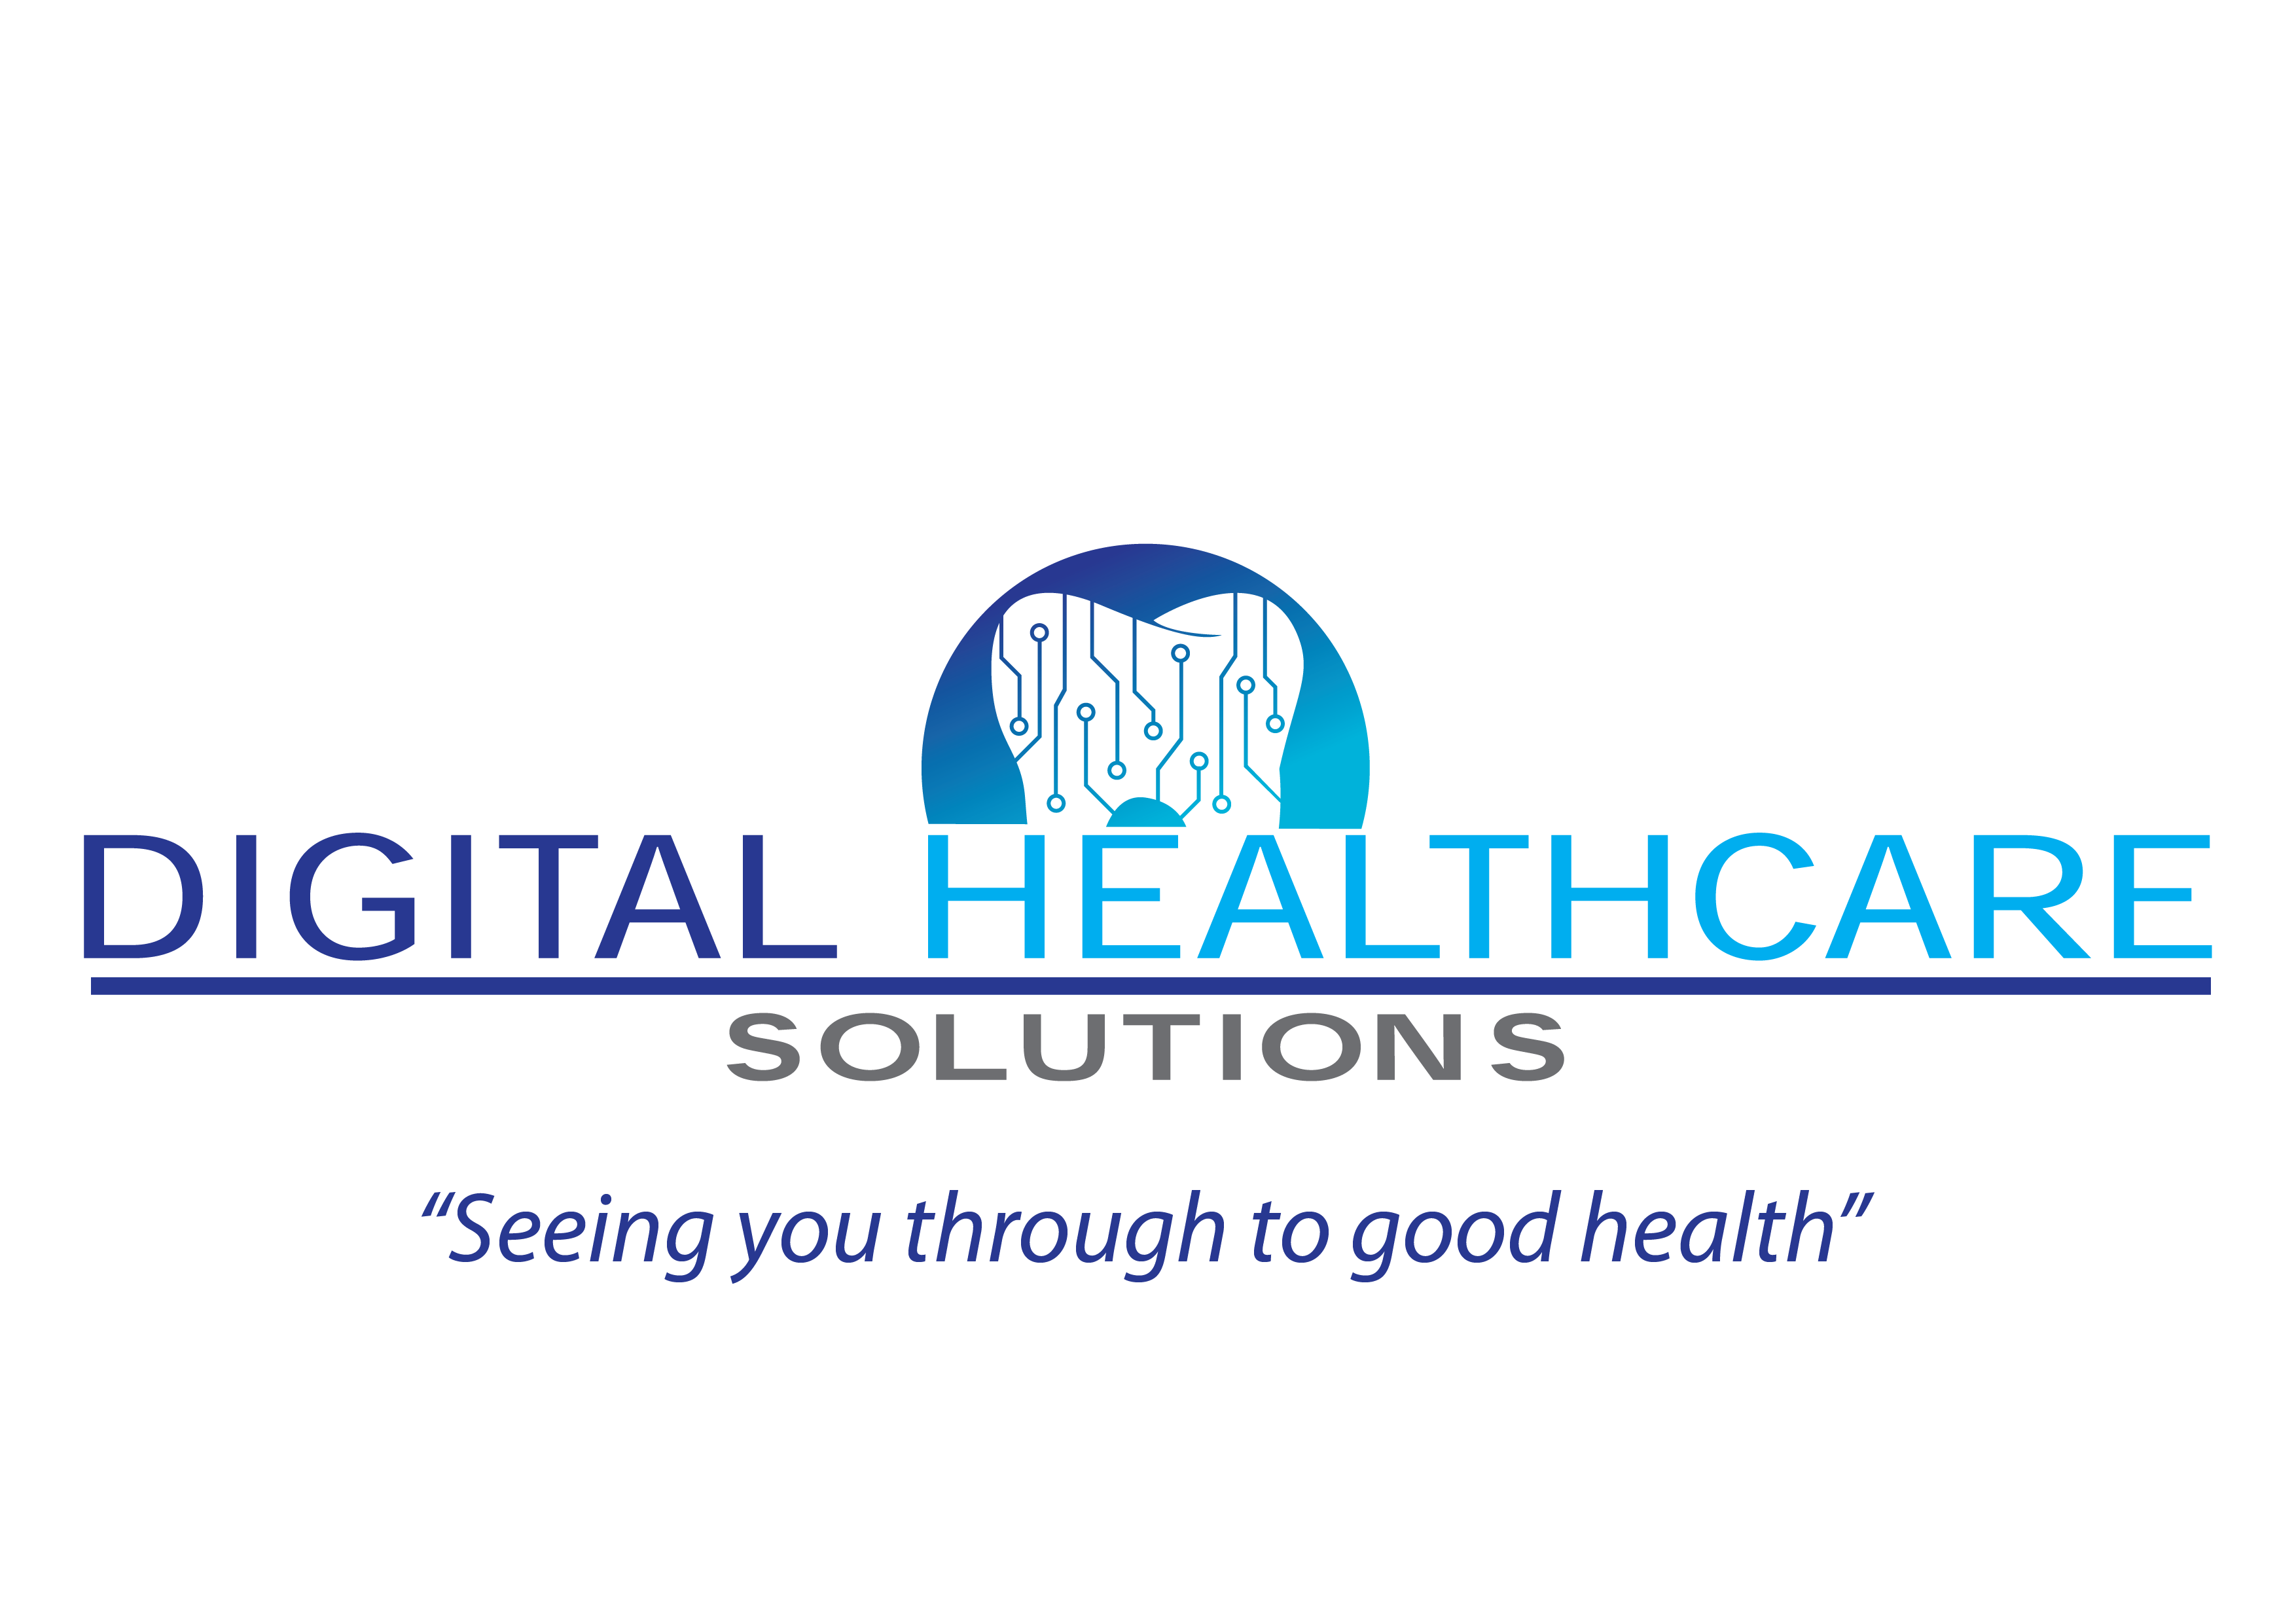 Digital Health care